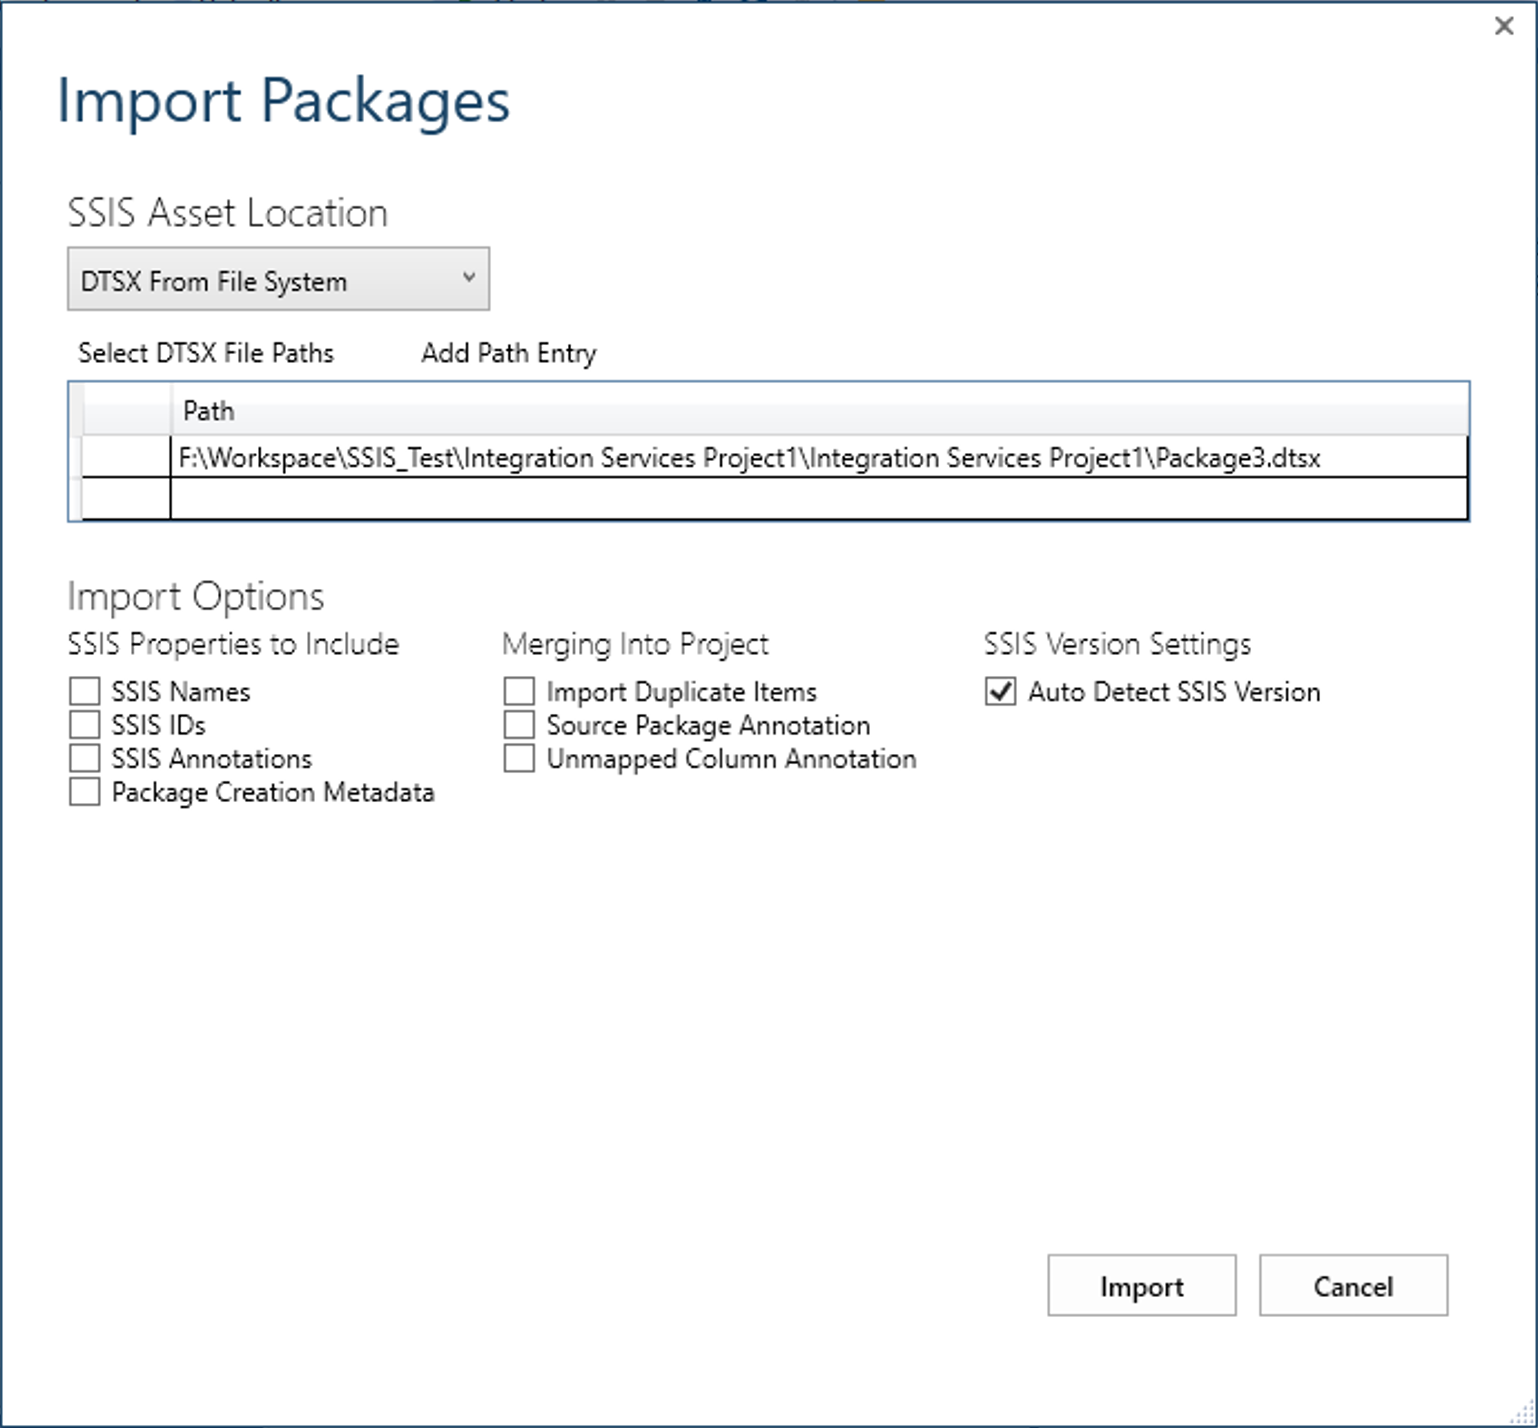 BimlExpress Import packages tool